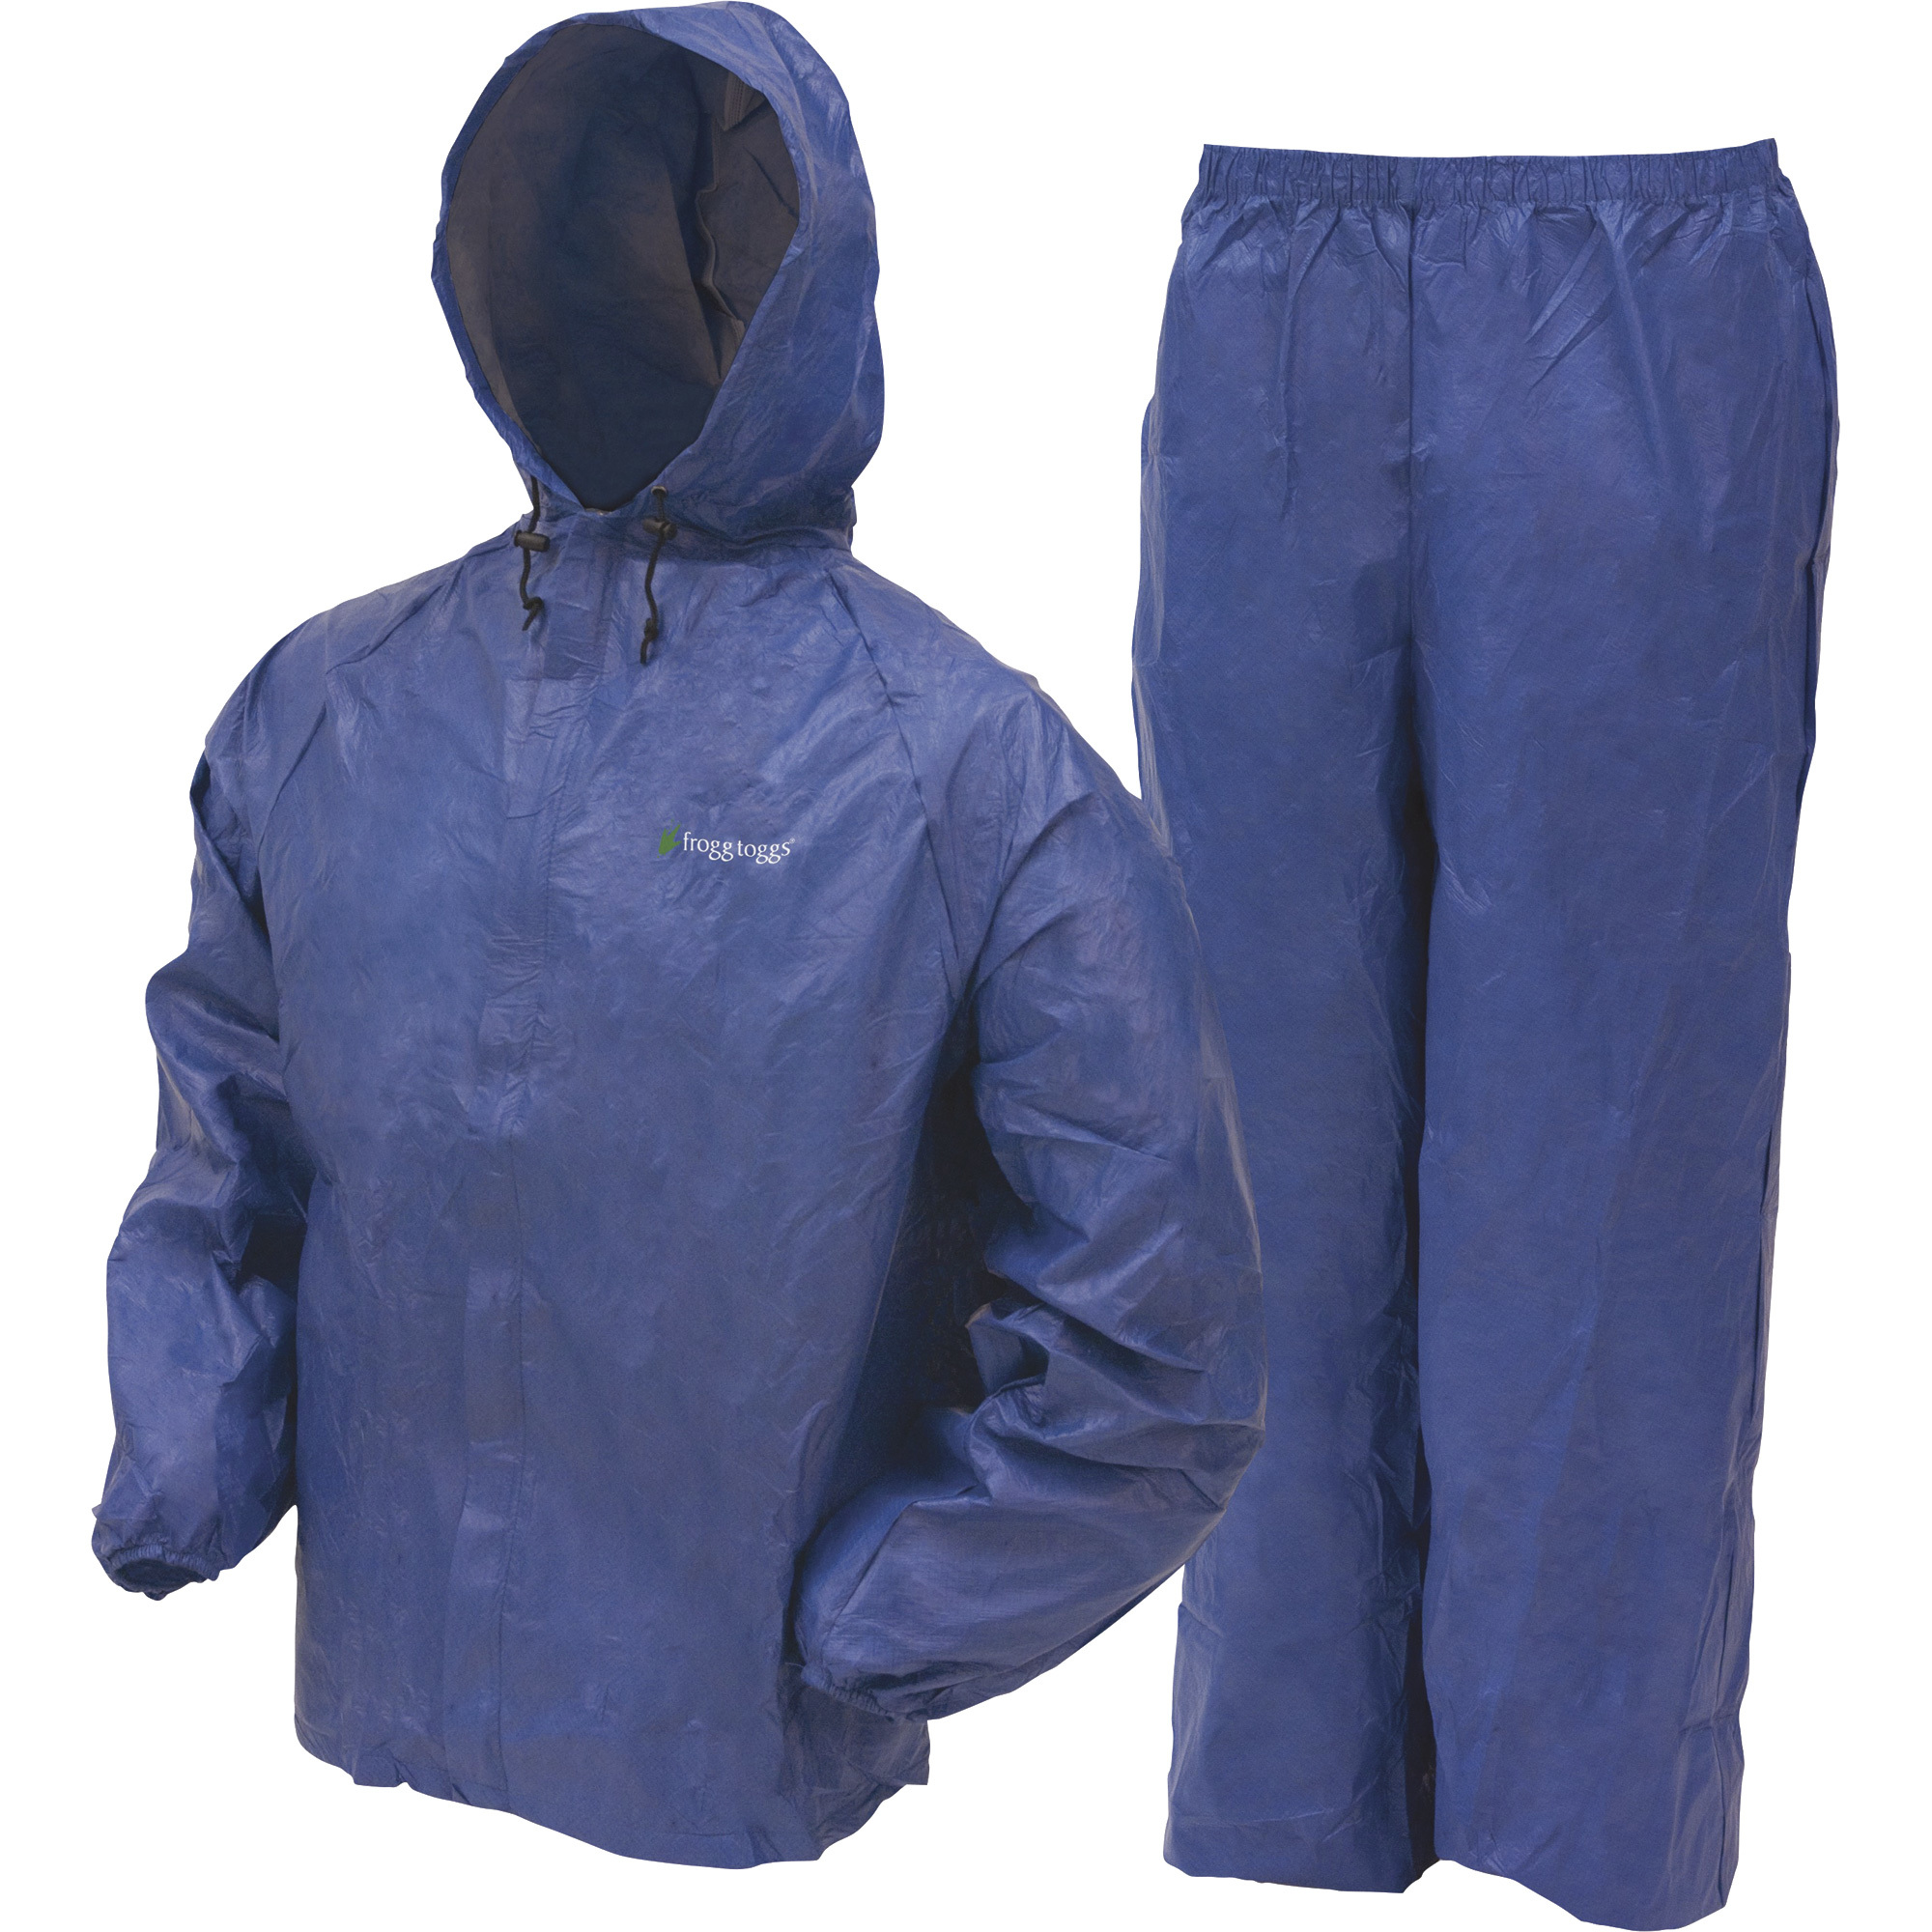 Frogg Toggs Men's Ultra-Lite 2 Jacket and Pants Rain Suit â Blue, Large, Model UL12104-12LG